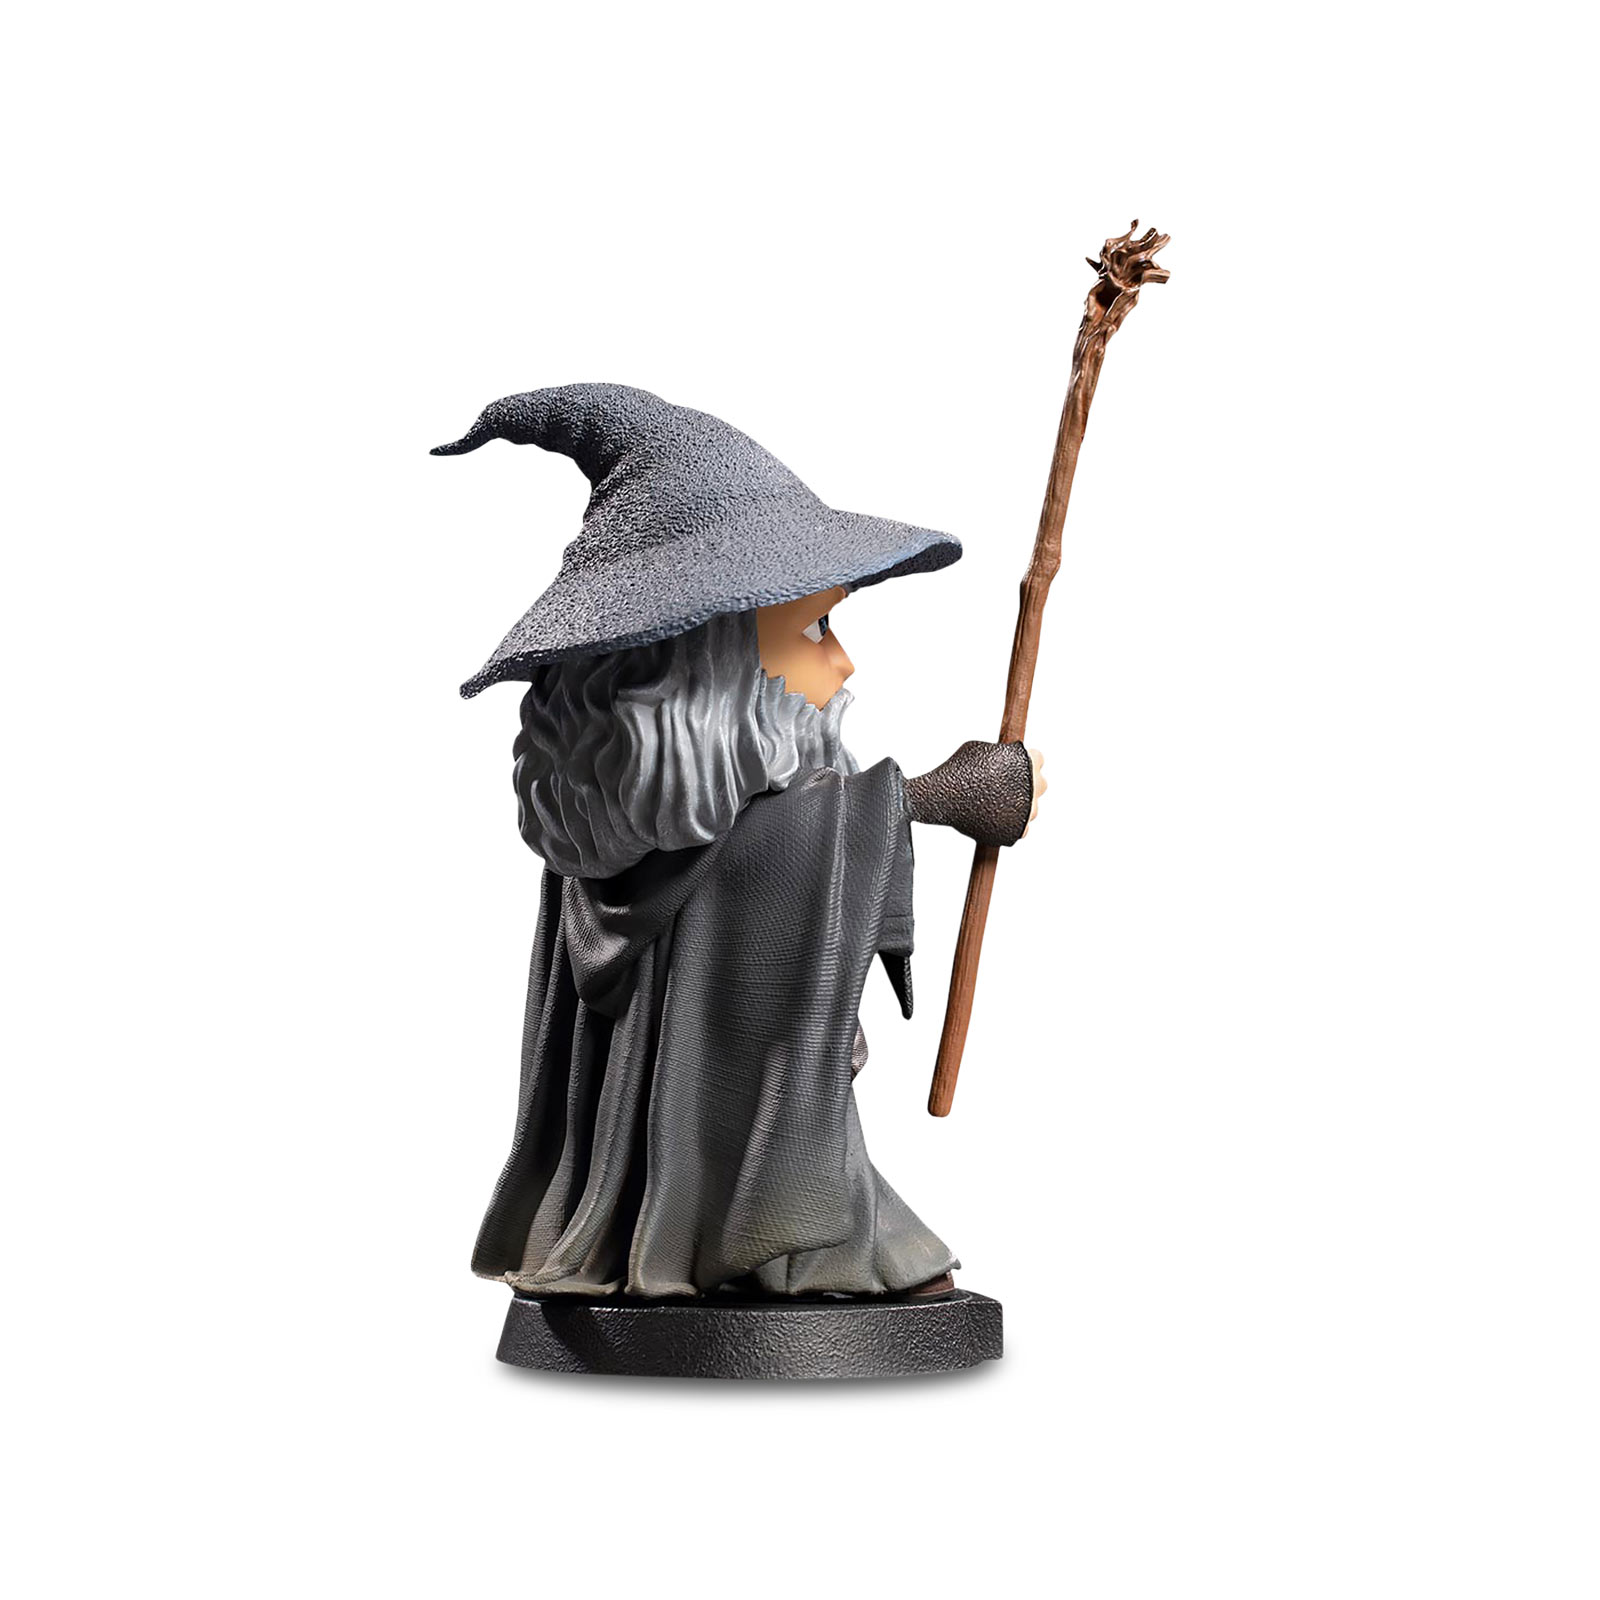 Herr der Ringe - Gandalf Minico Figur